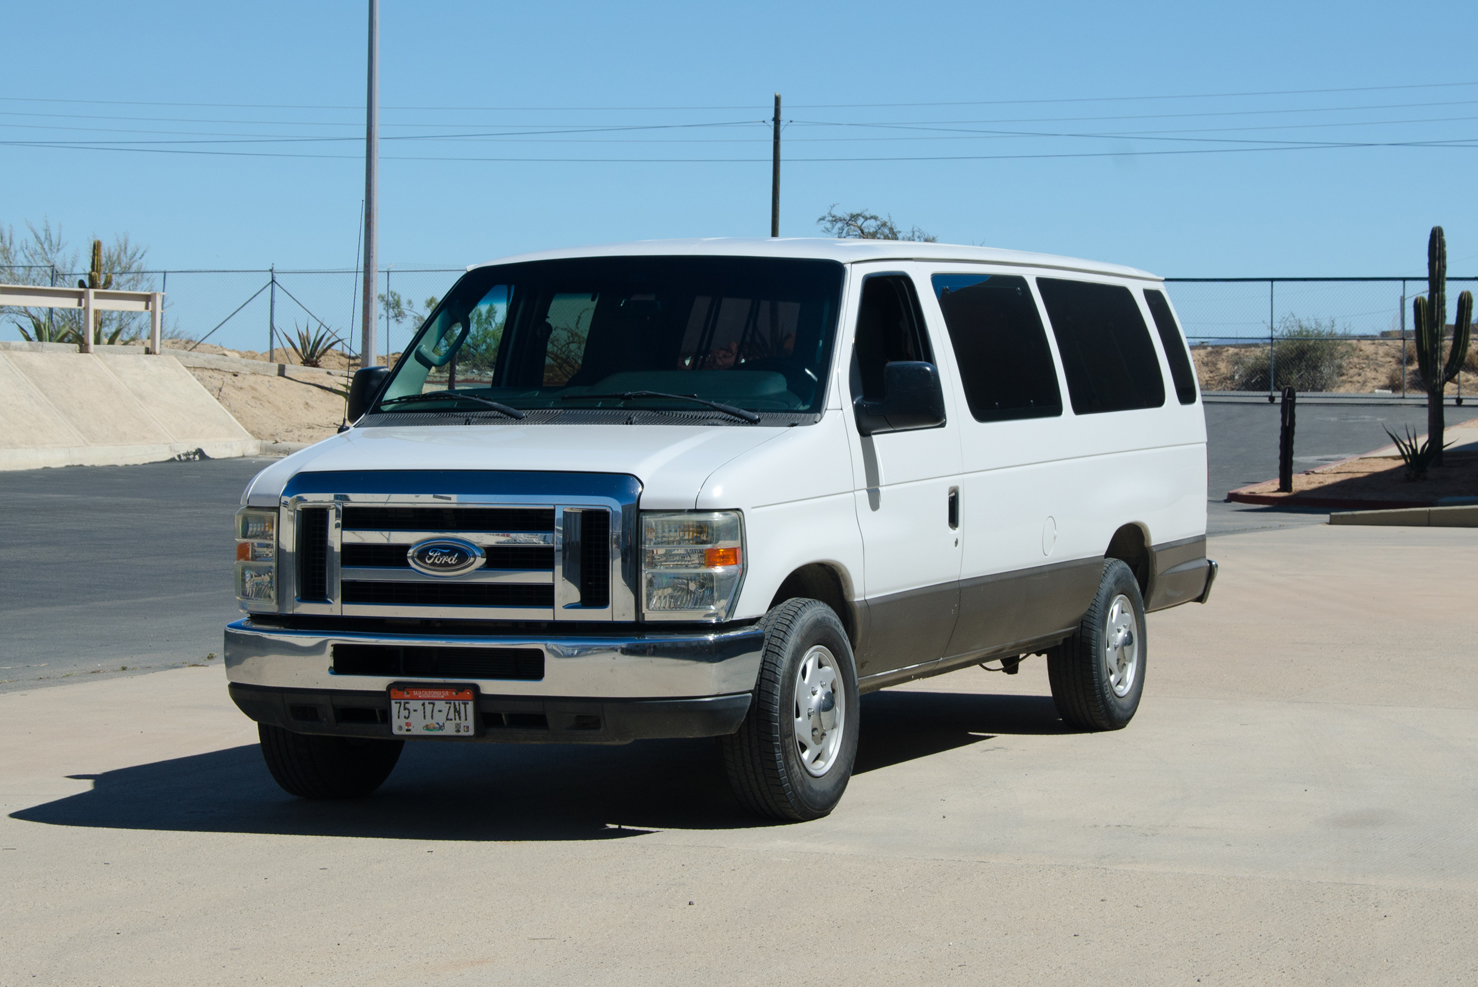 Ford Super Duty | Camionetas Vans para 12-15 Pasajeros